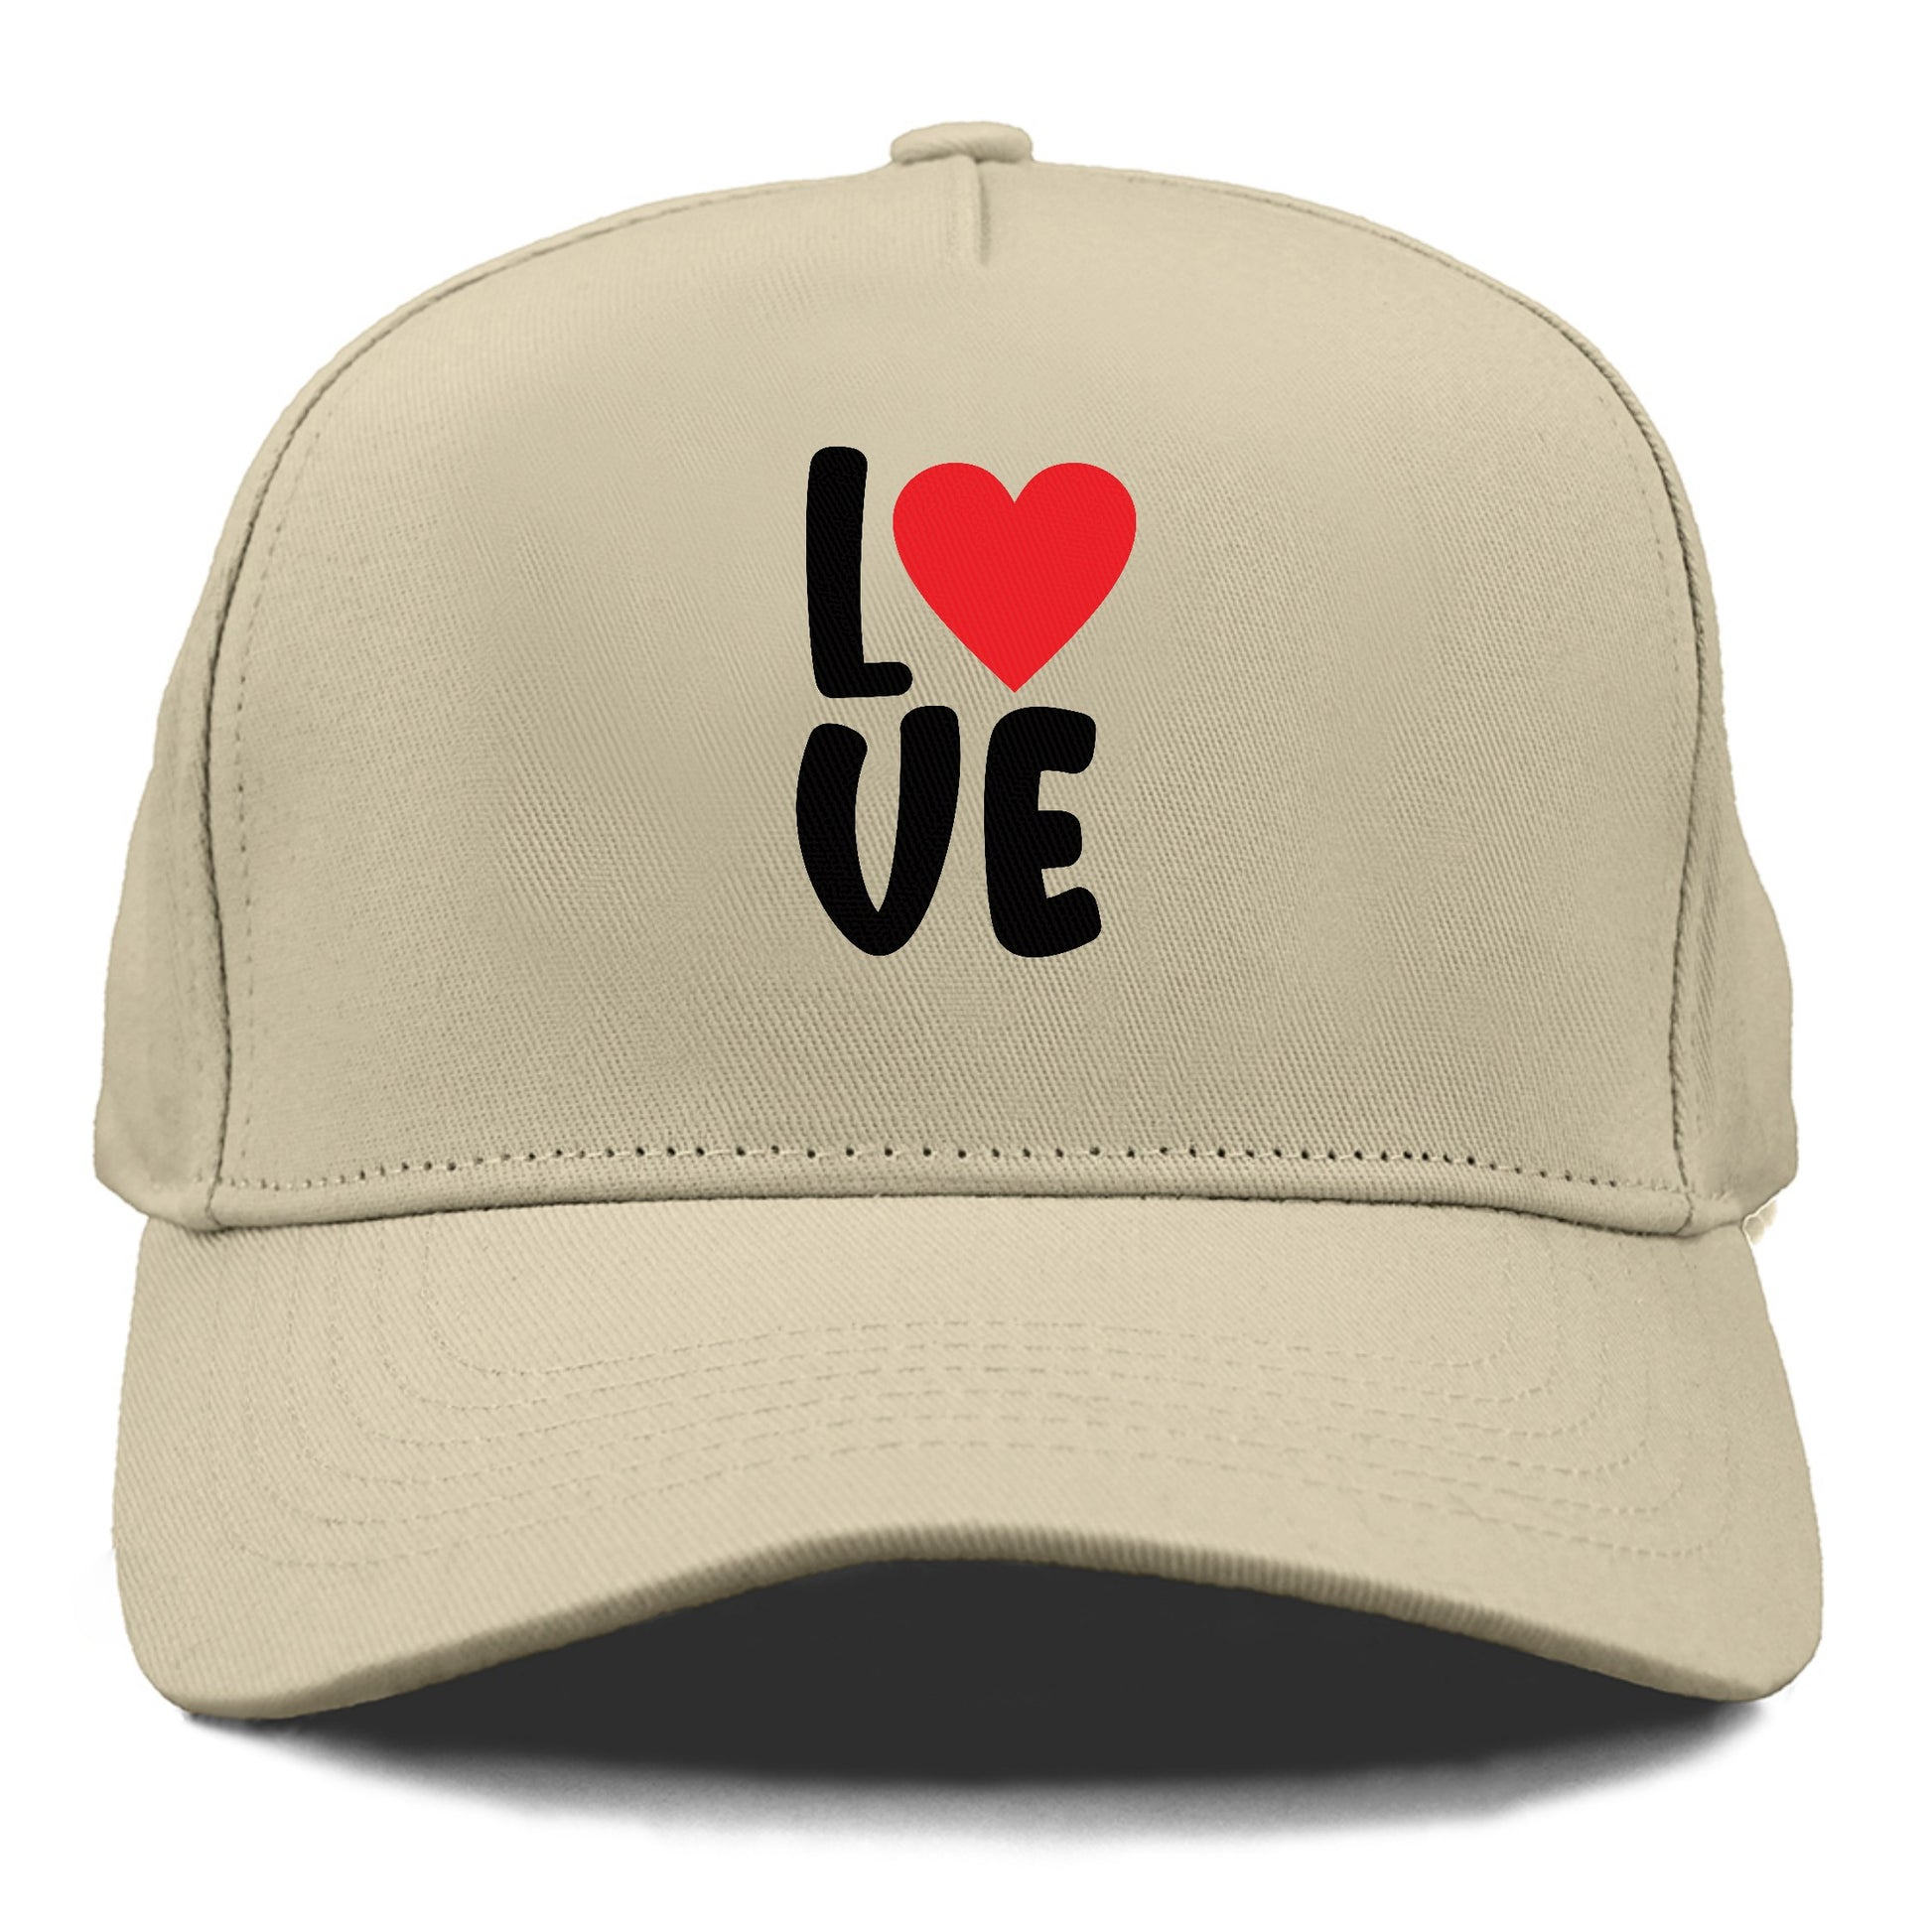 love 2 Hat